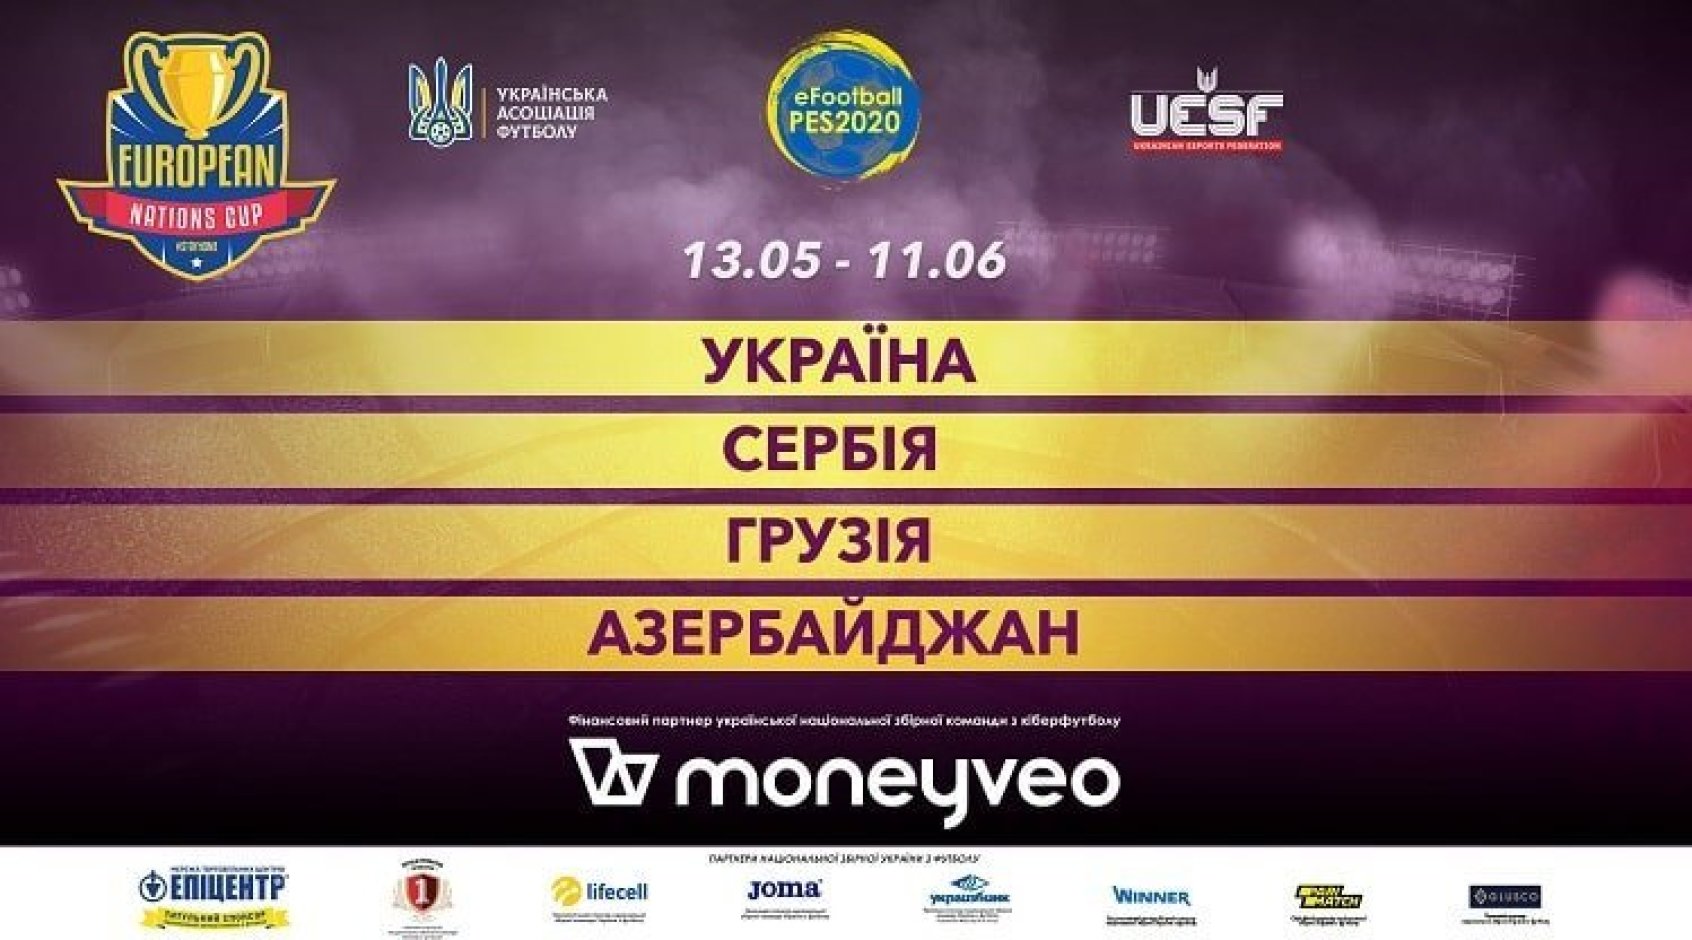 Збірна України з кіберфутболу у European Nations Cup. Пряма трансляція